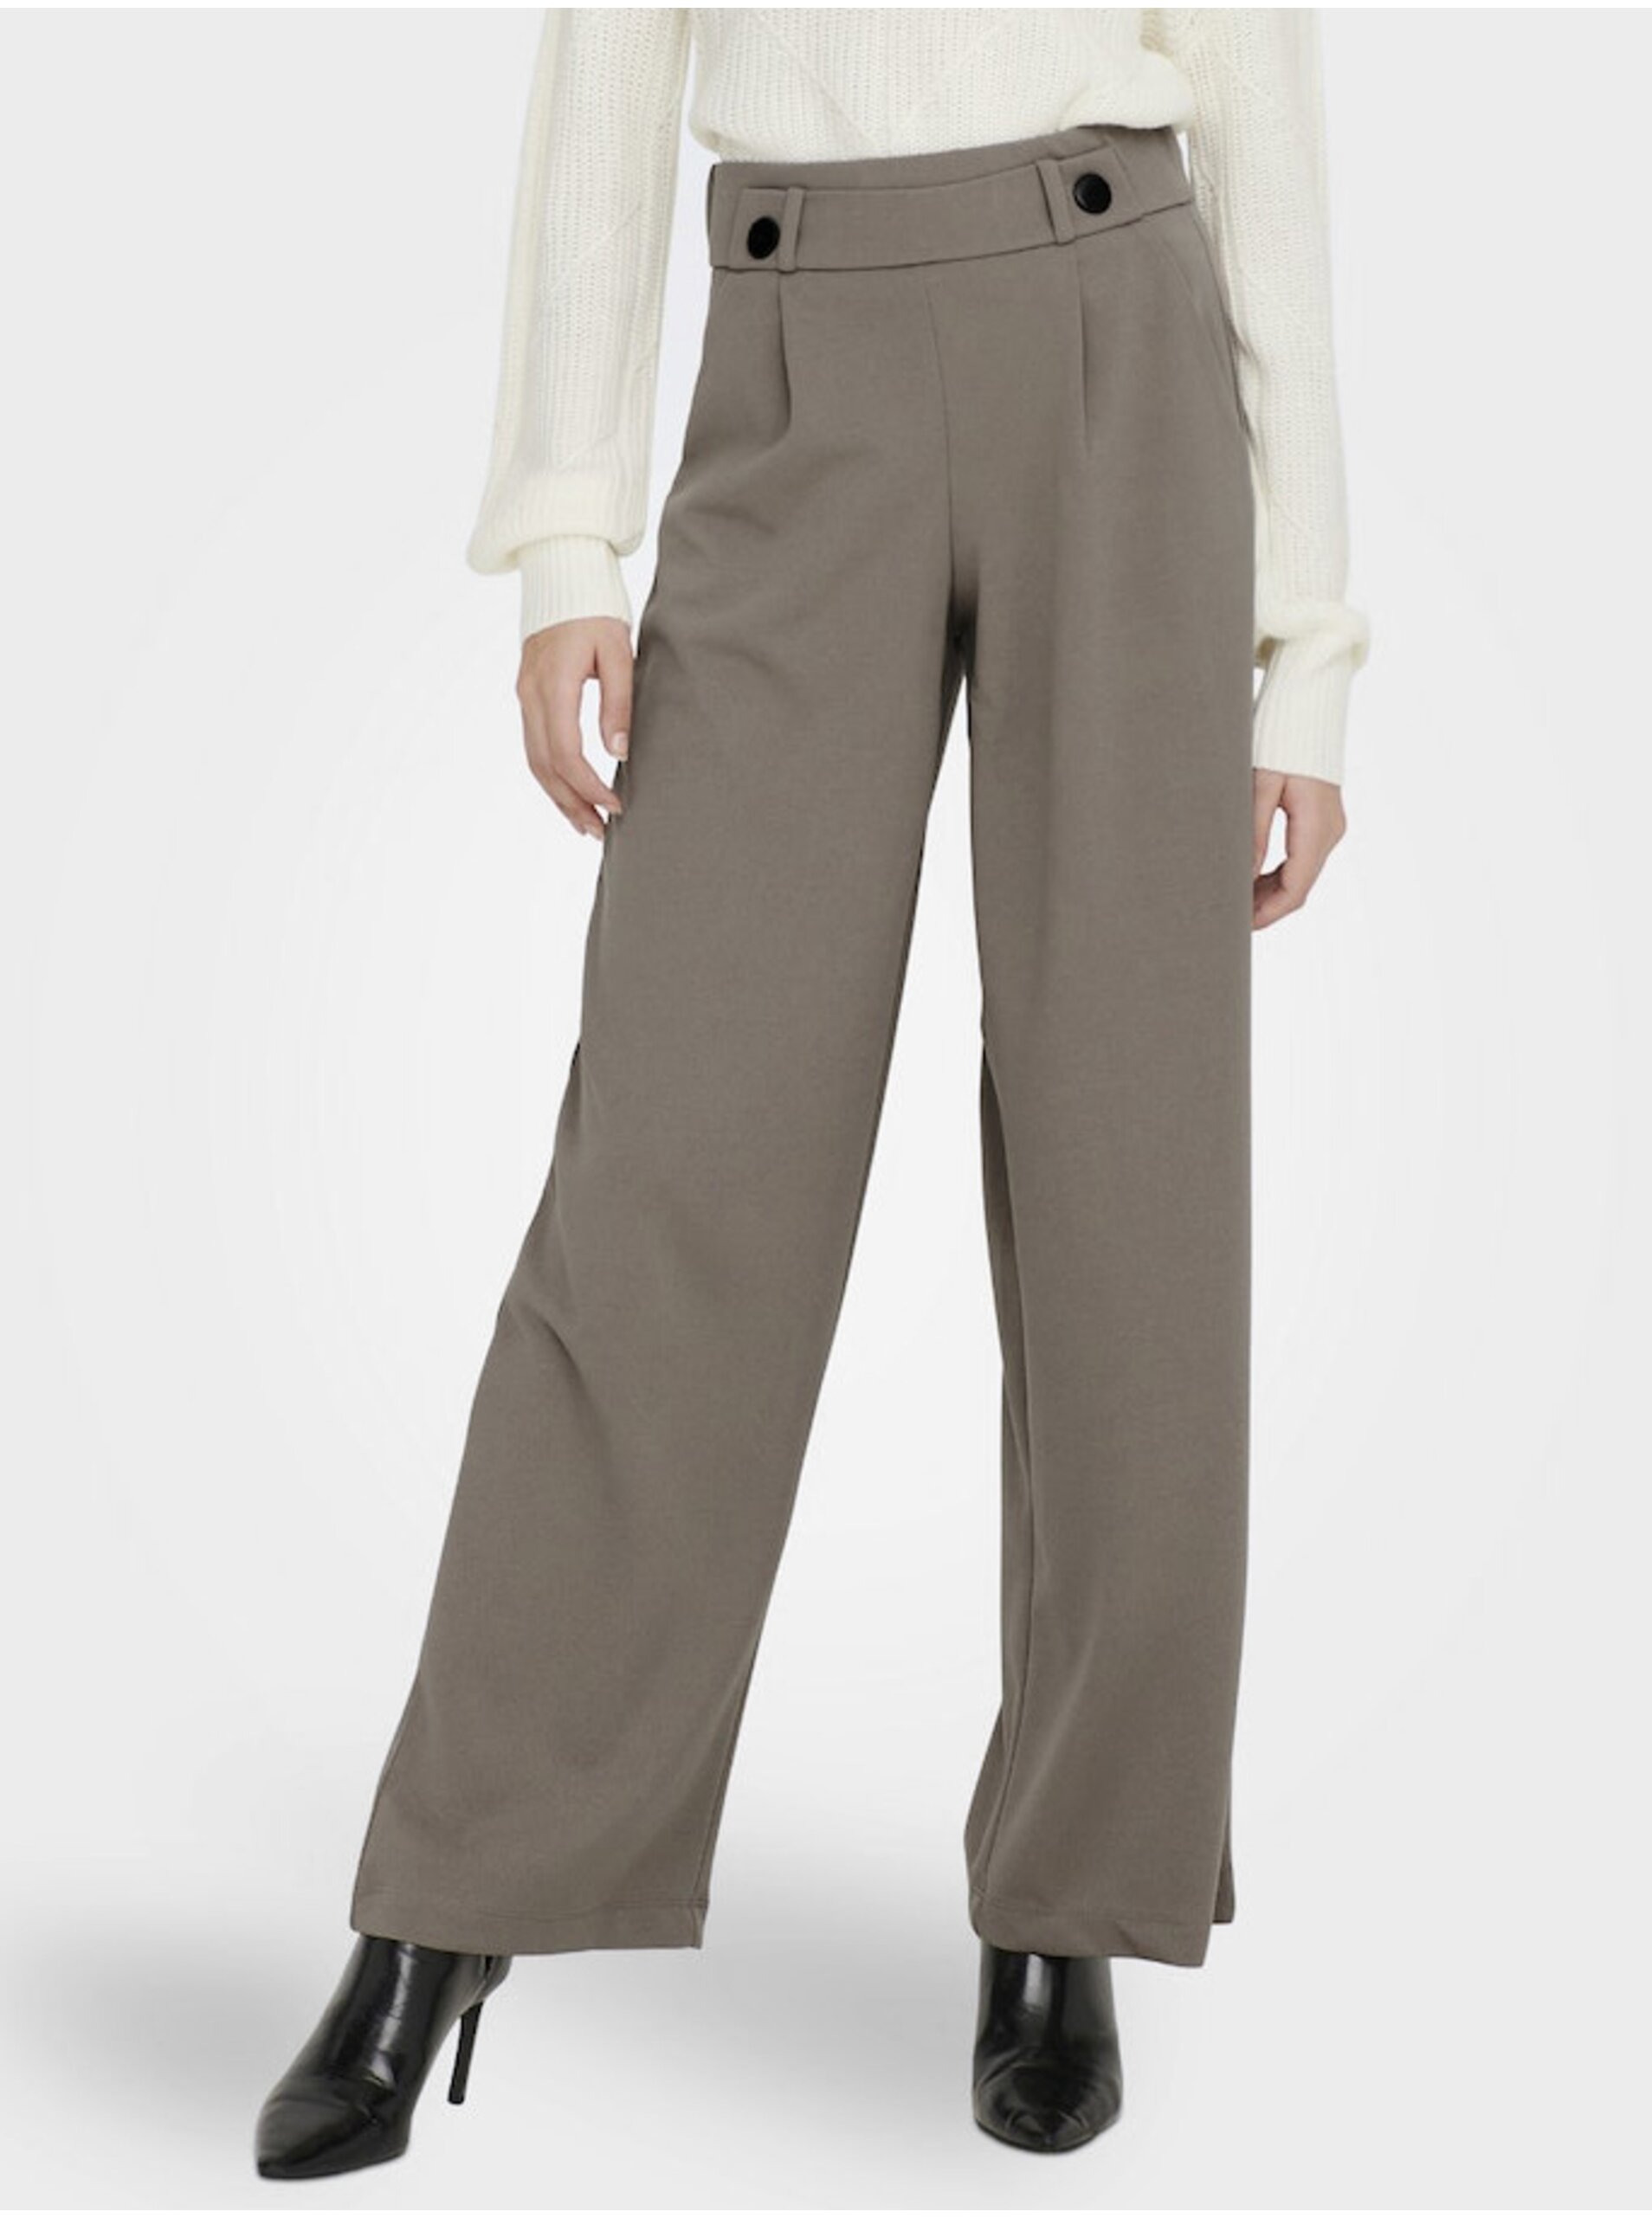 Women's brown wide trousers JDY Geggo - Women